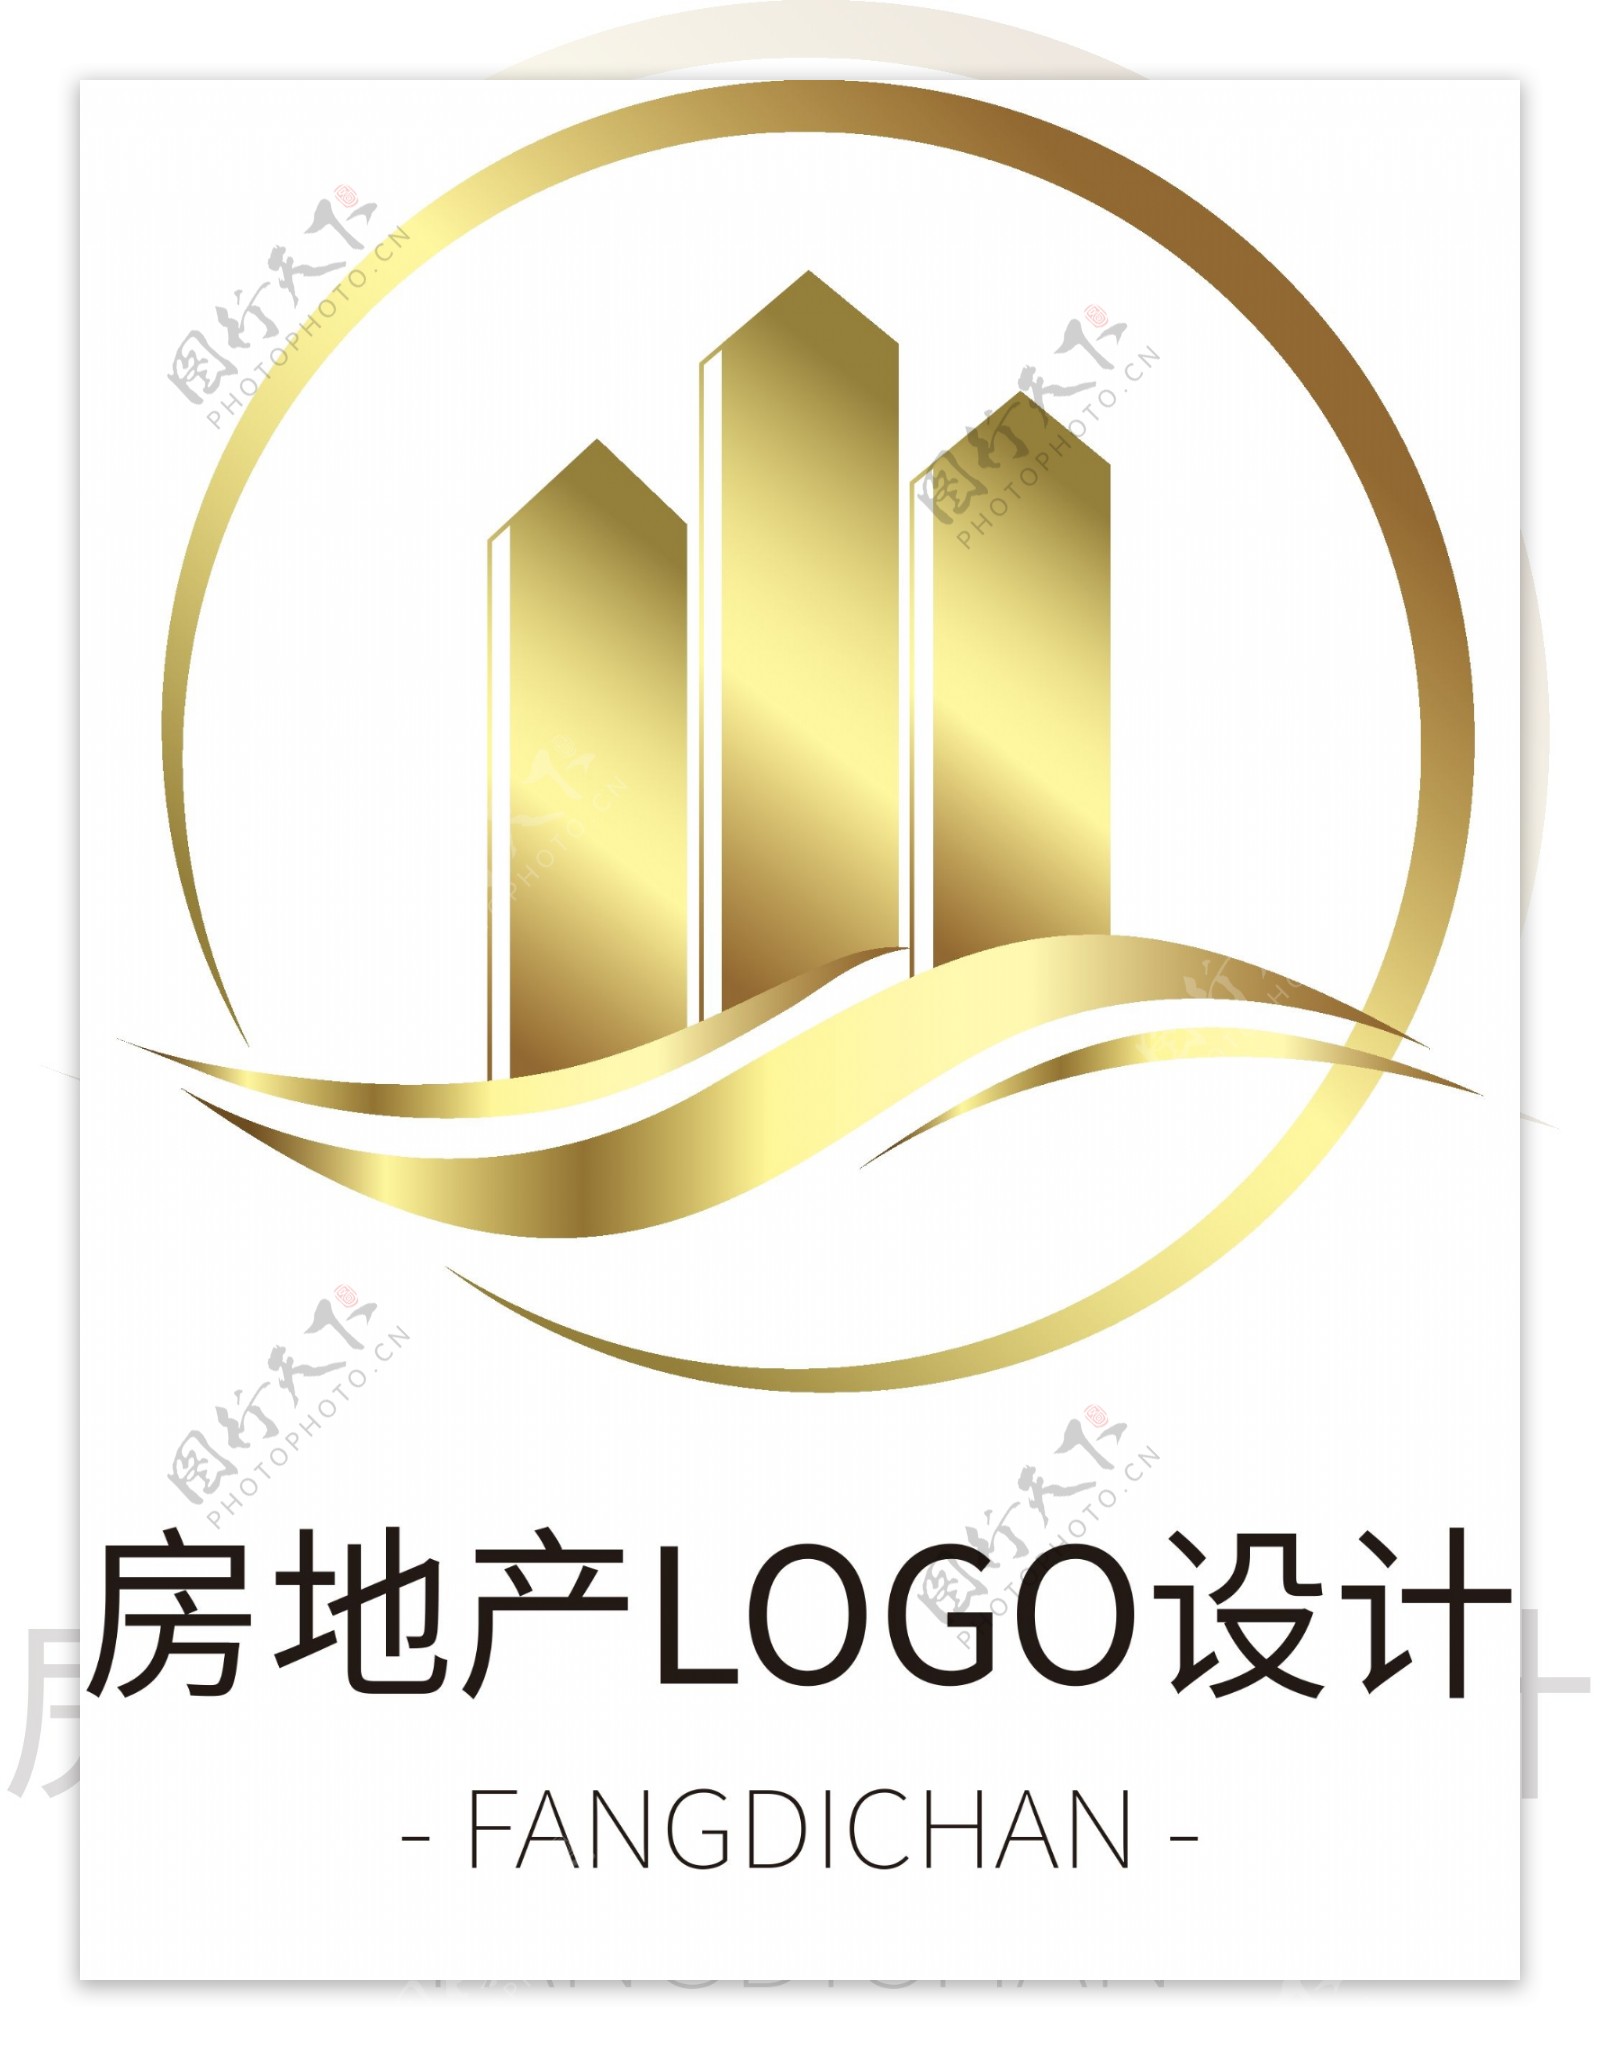 房地产金色logo